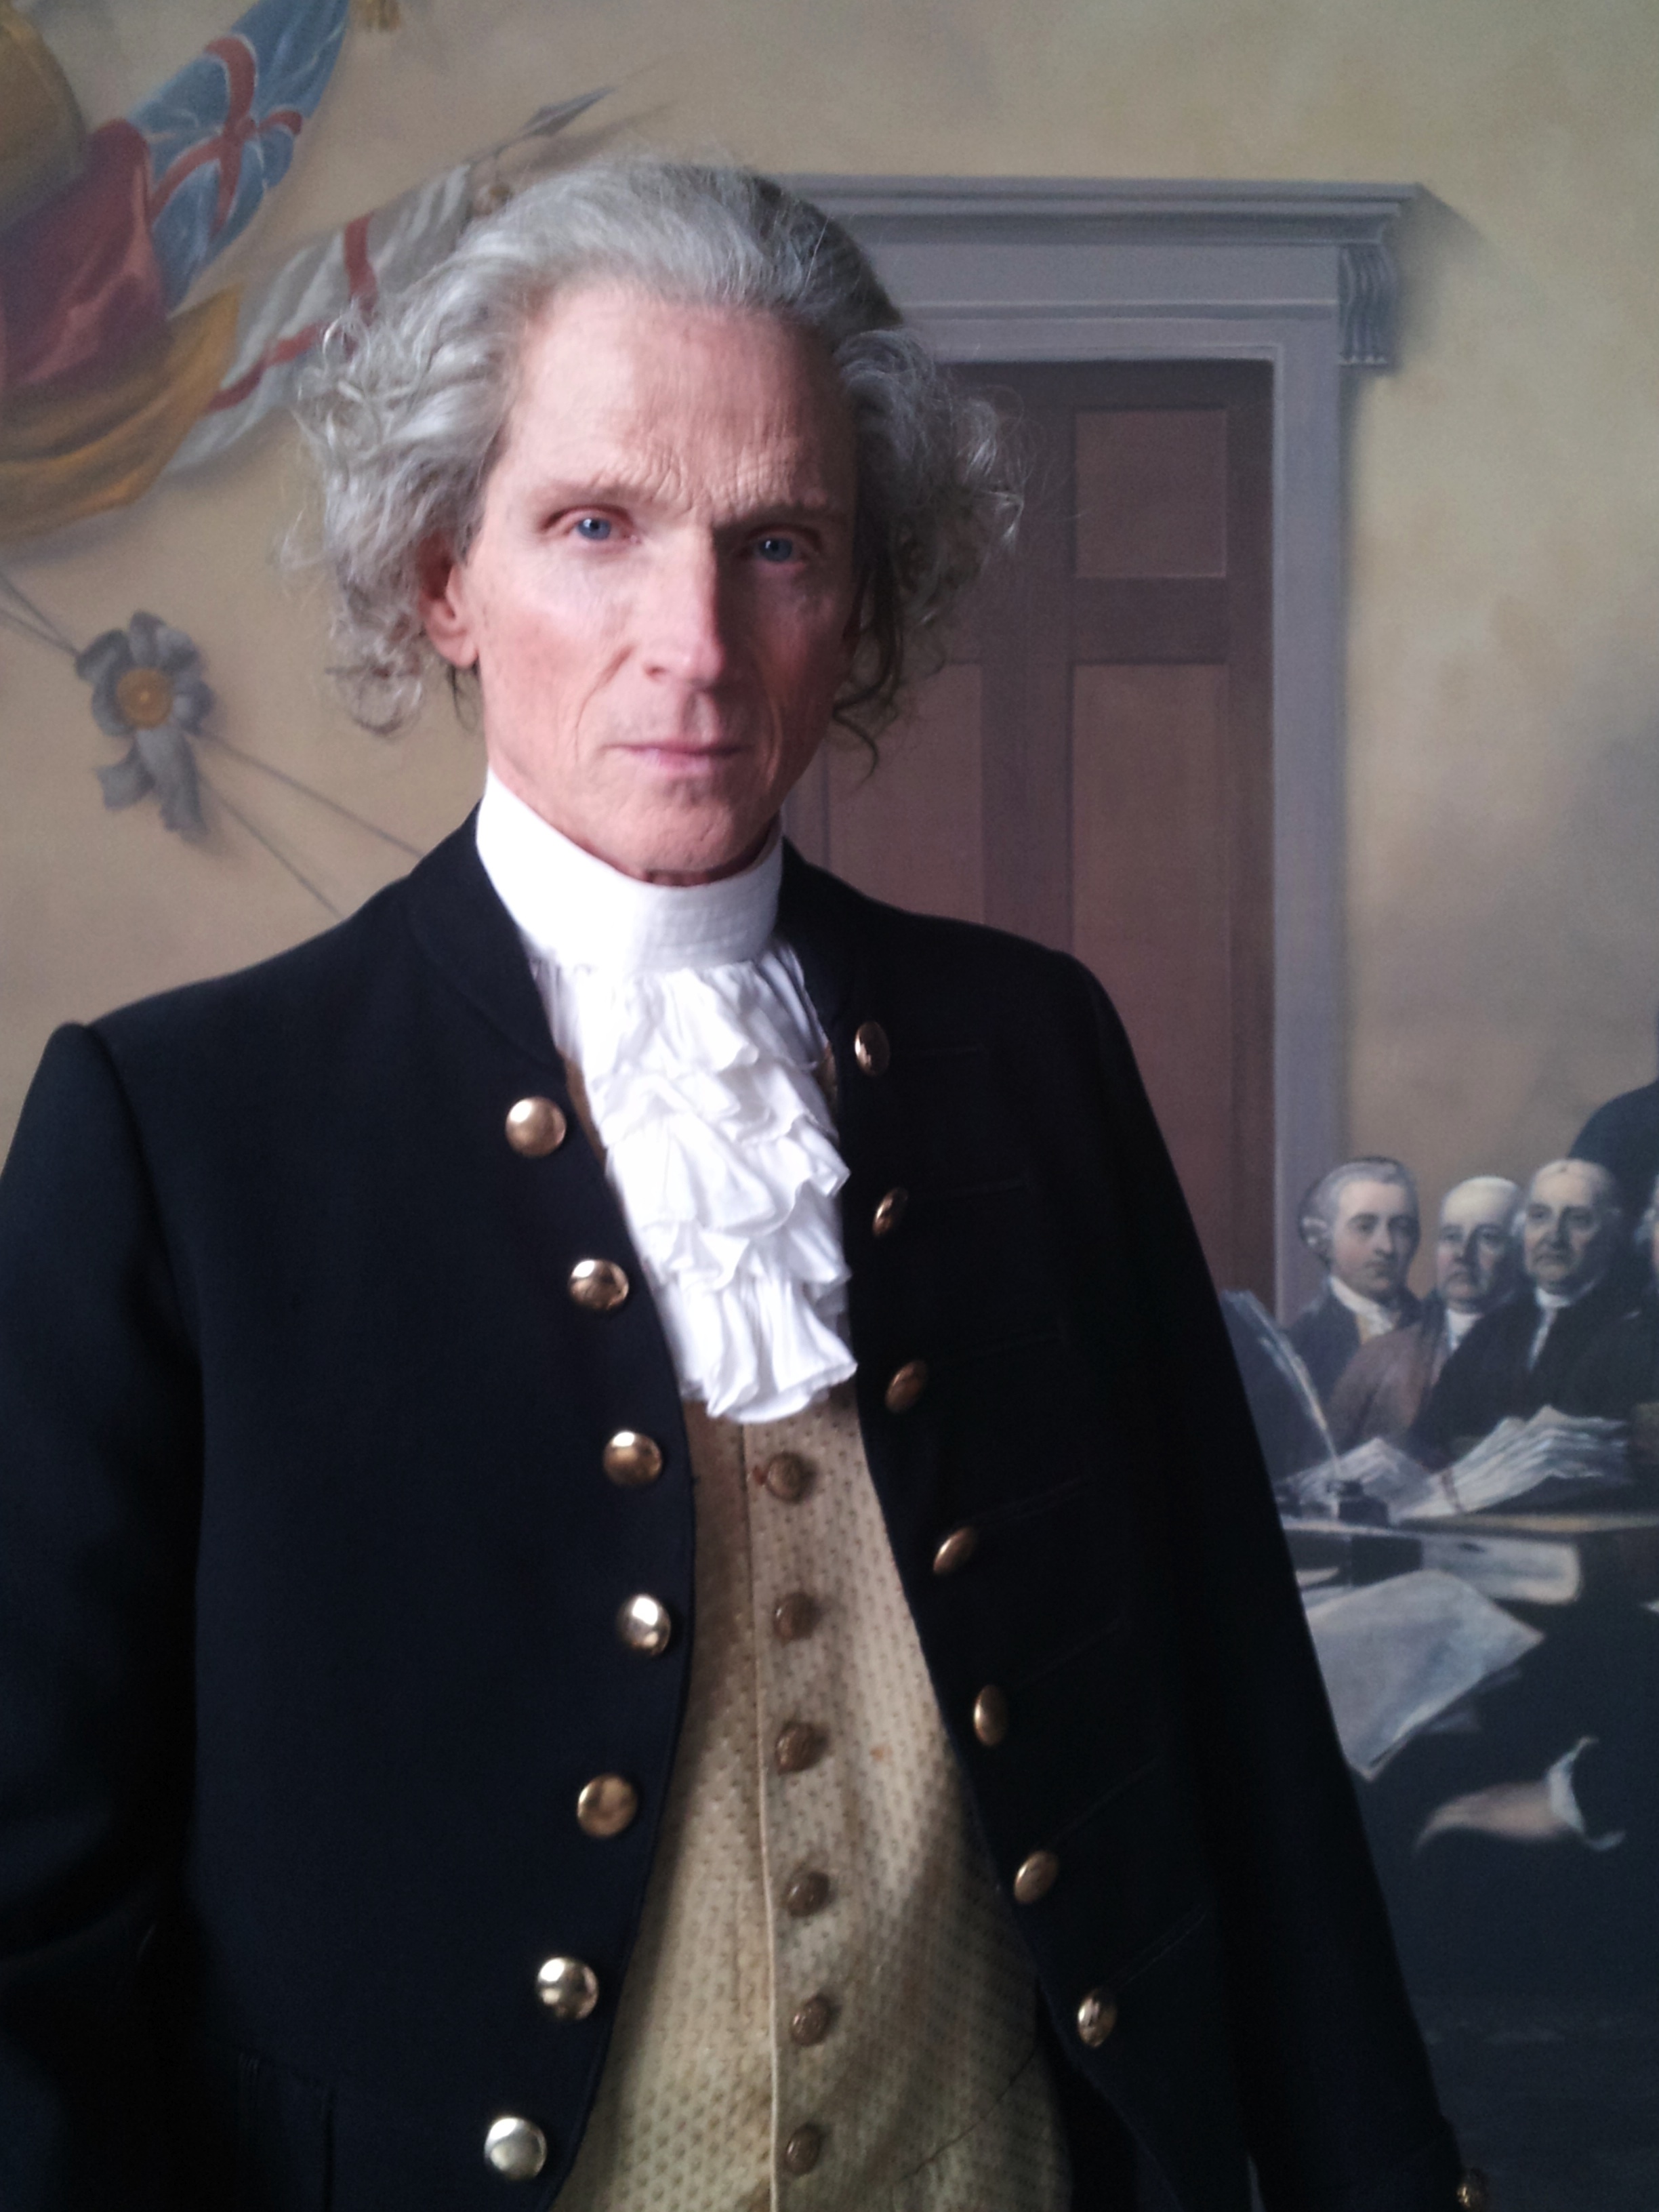 James Horan as Thomas Jefferson in a Coke Zero commercial.